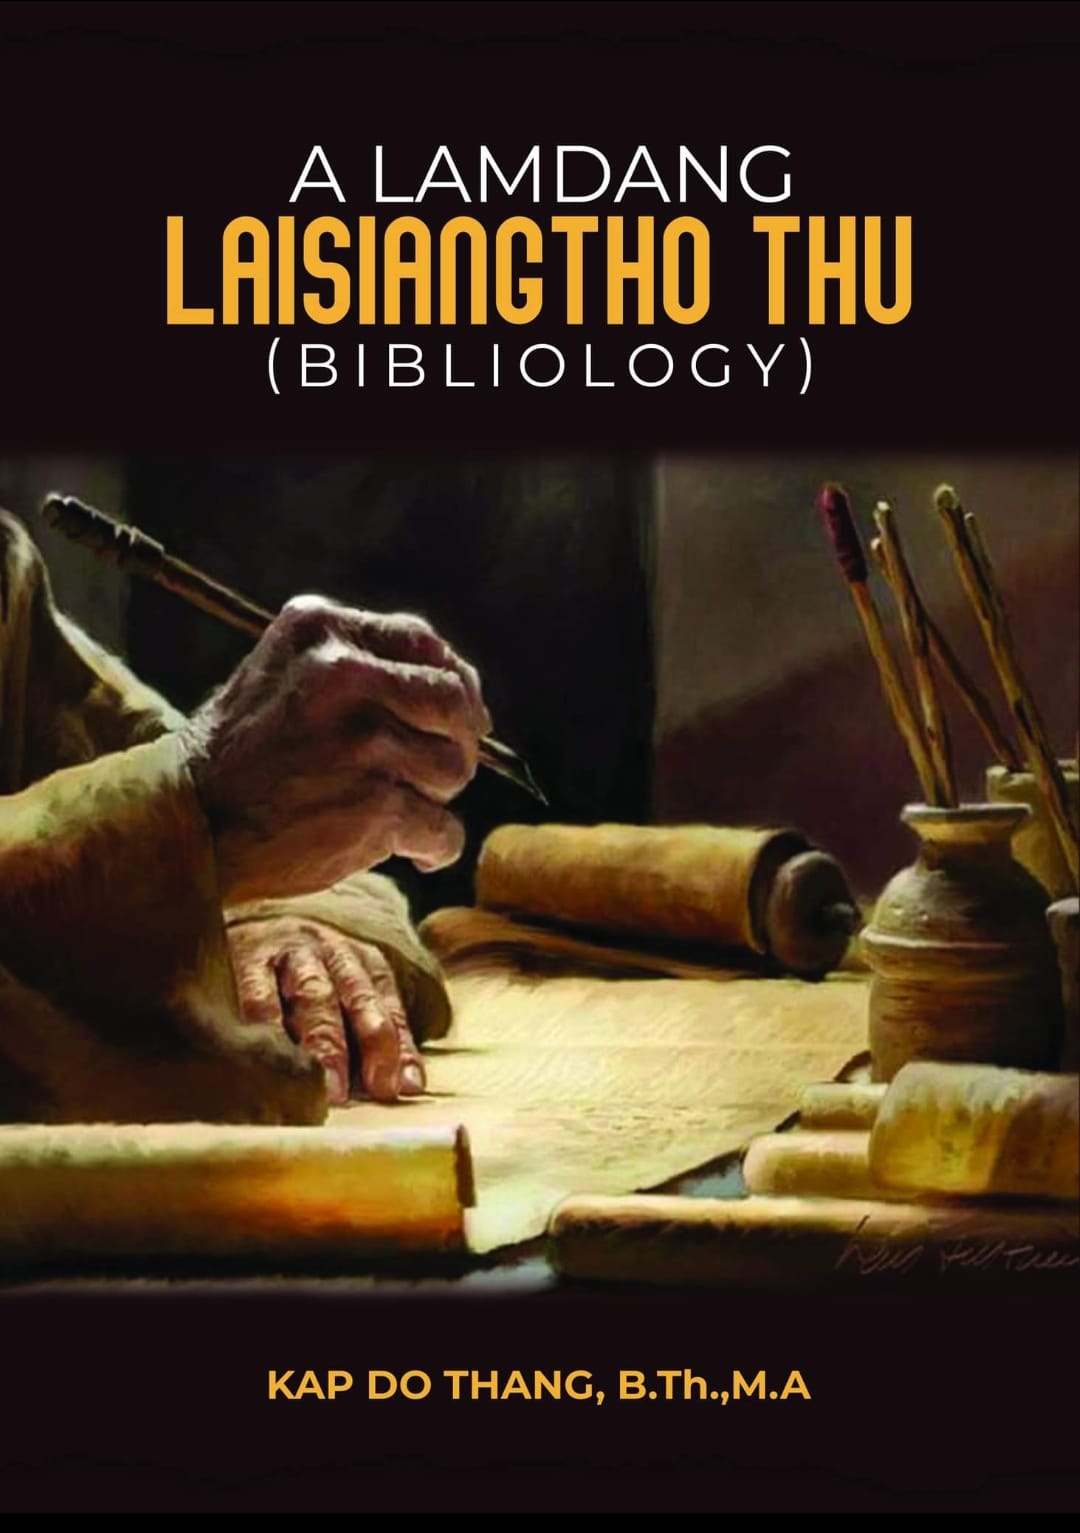 A Lamdang Laisiangtho Thu (Bibliology)